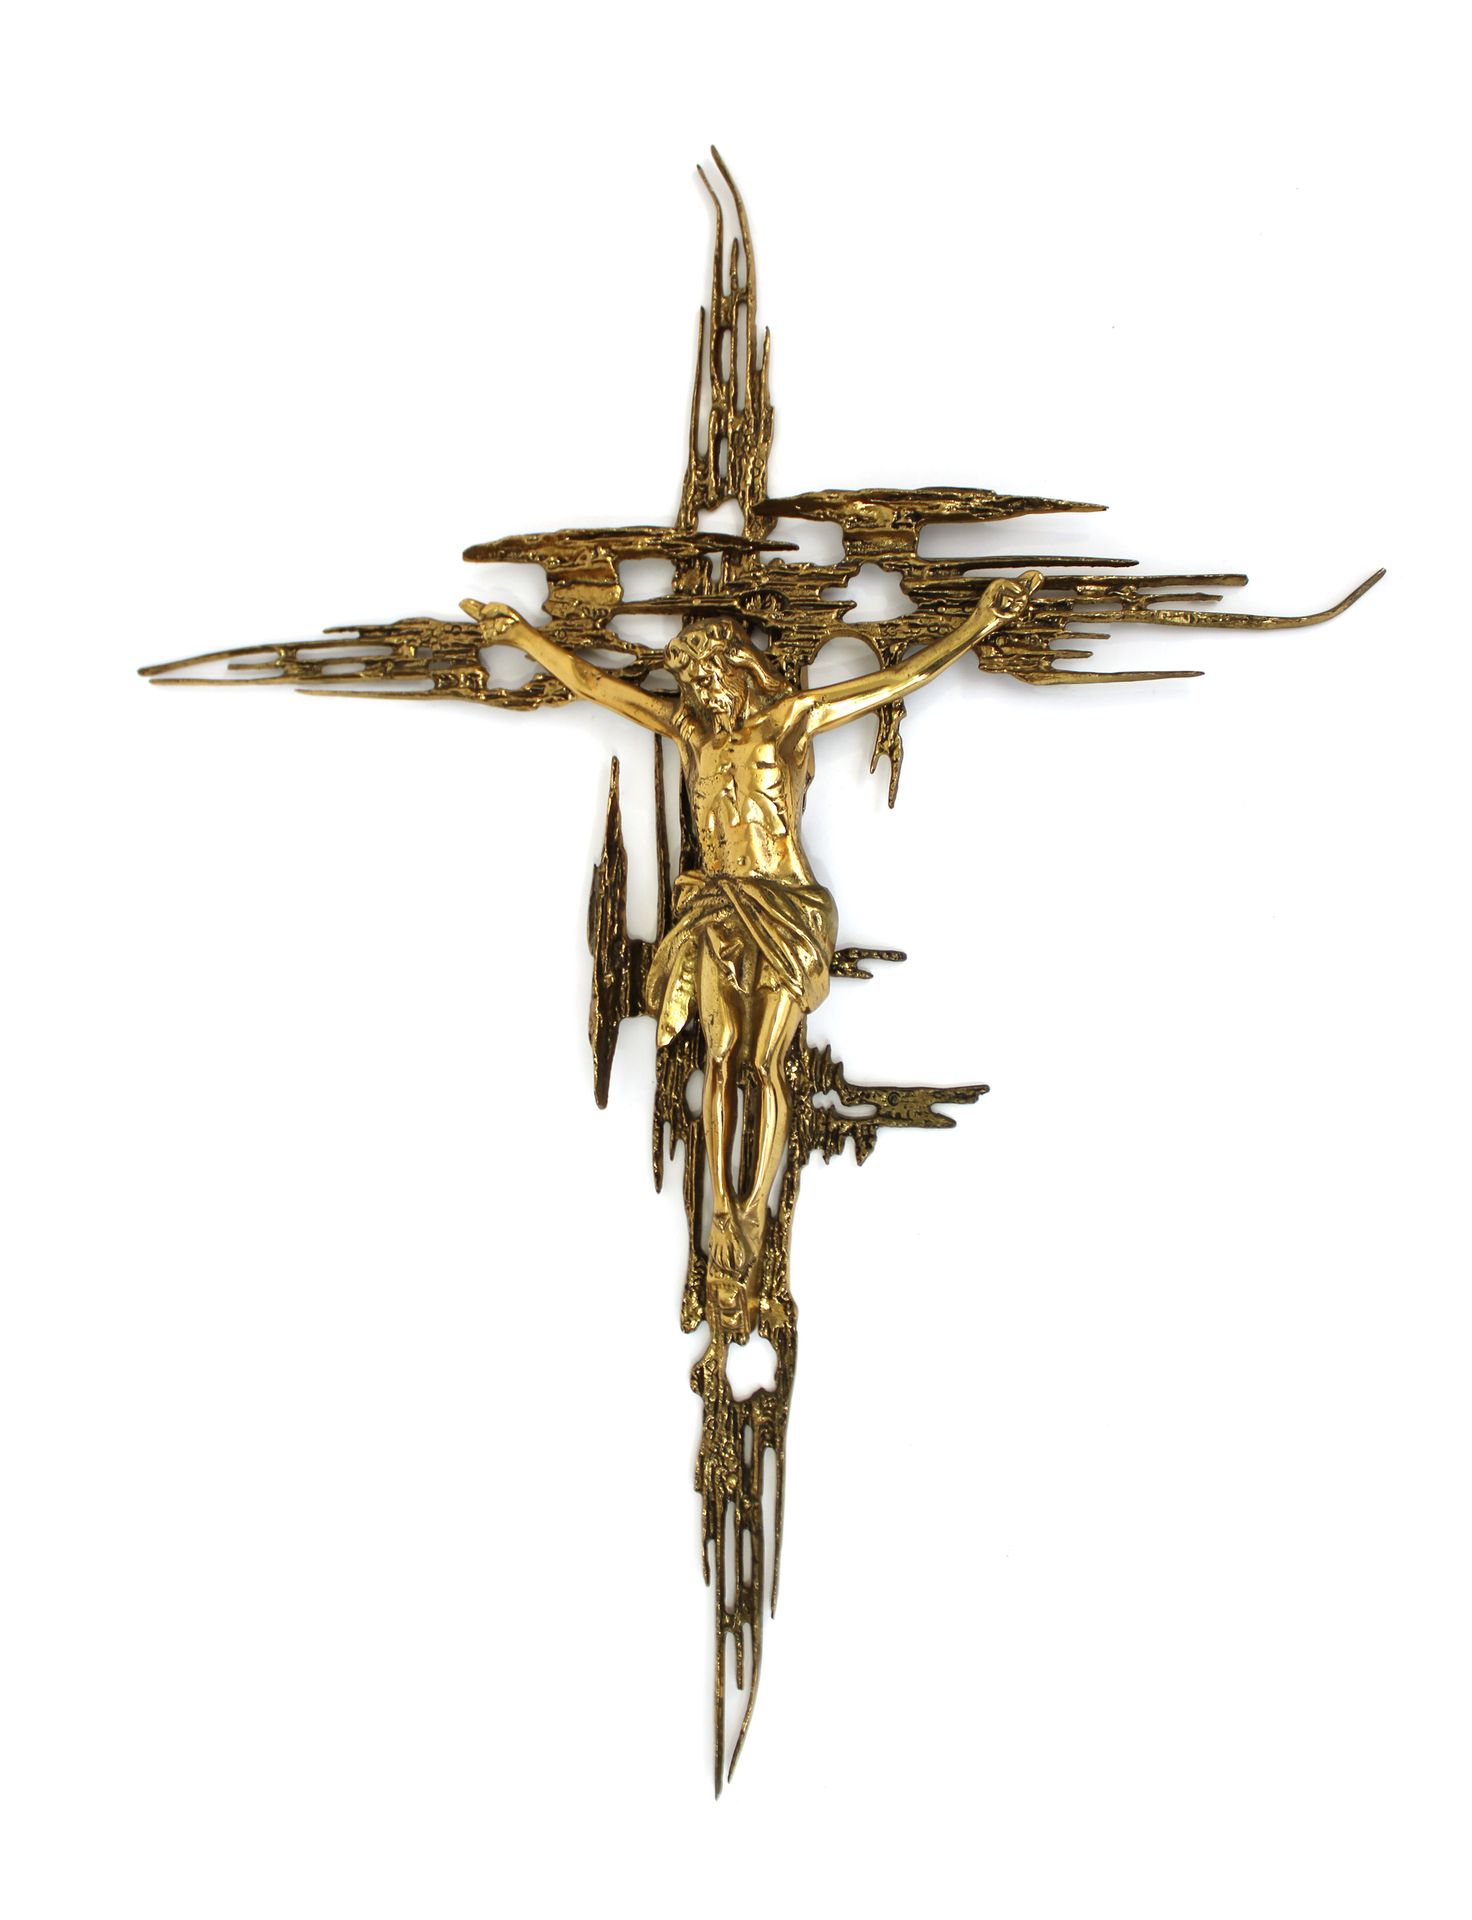 Null D’après Salvador DALI
Crucifix en bronze doré
77 x 60 cm